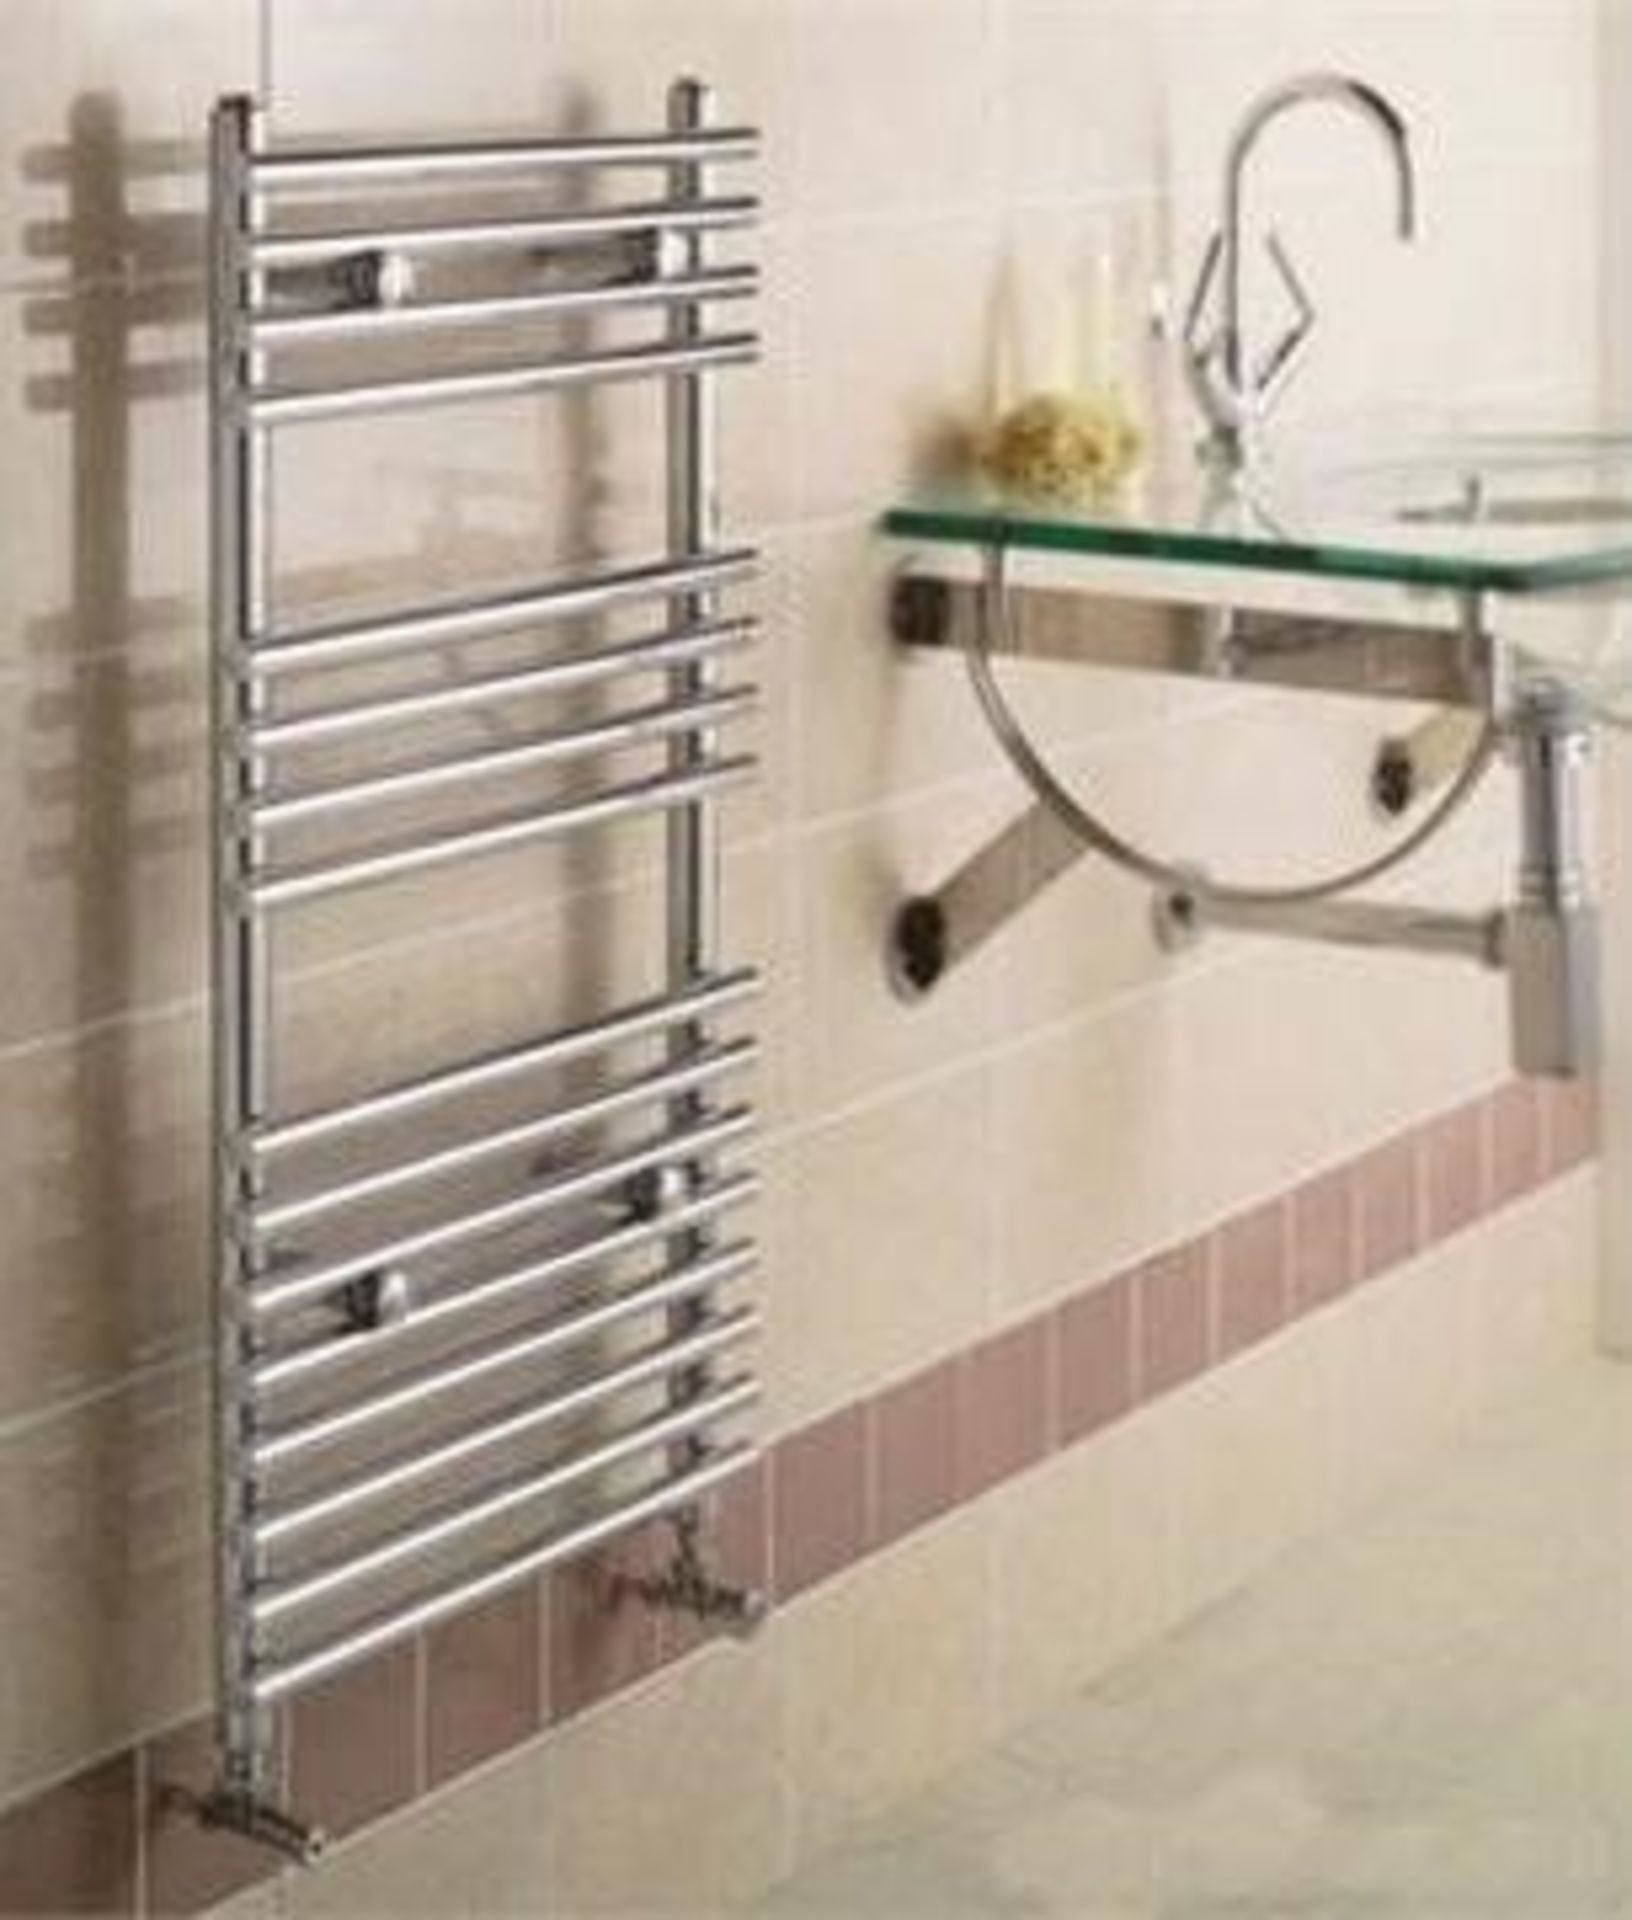 1 x Quinn Topaz Bathroom Ladder Towel Rail With Chrome Finish - Image 2 of 3